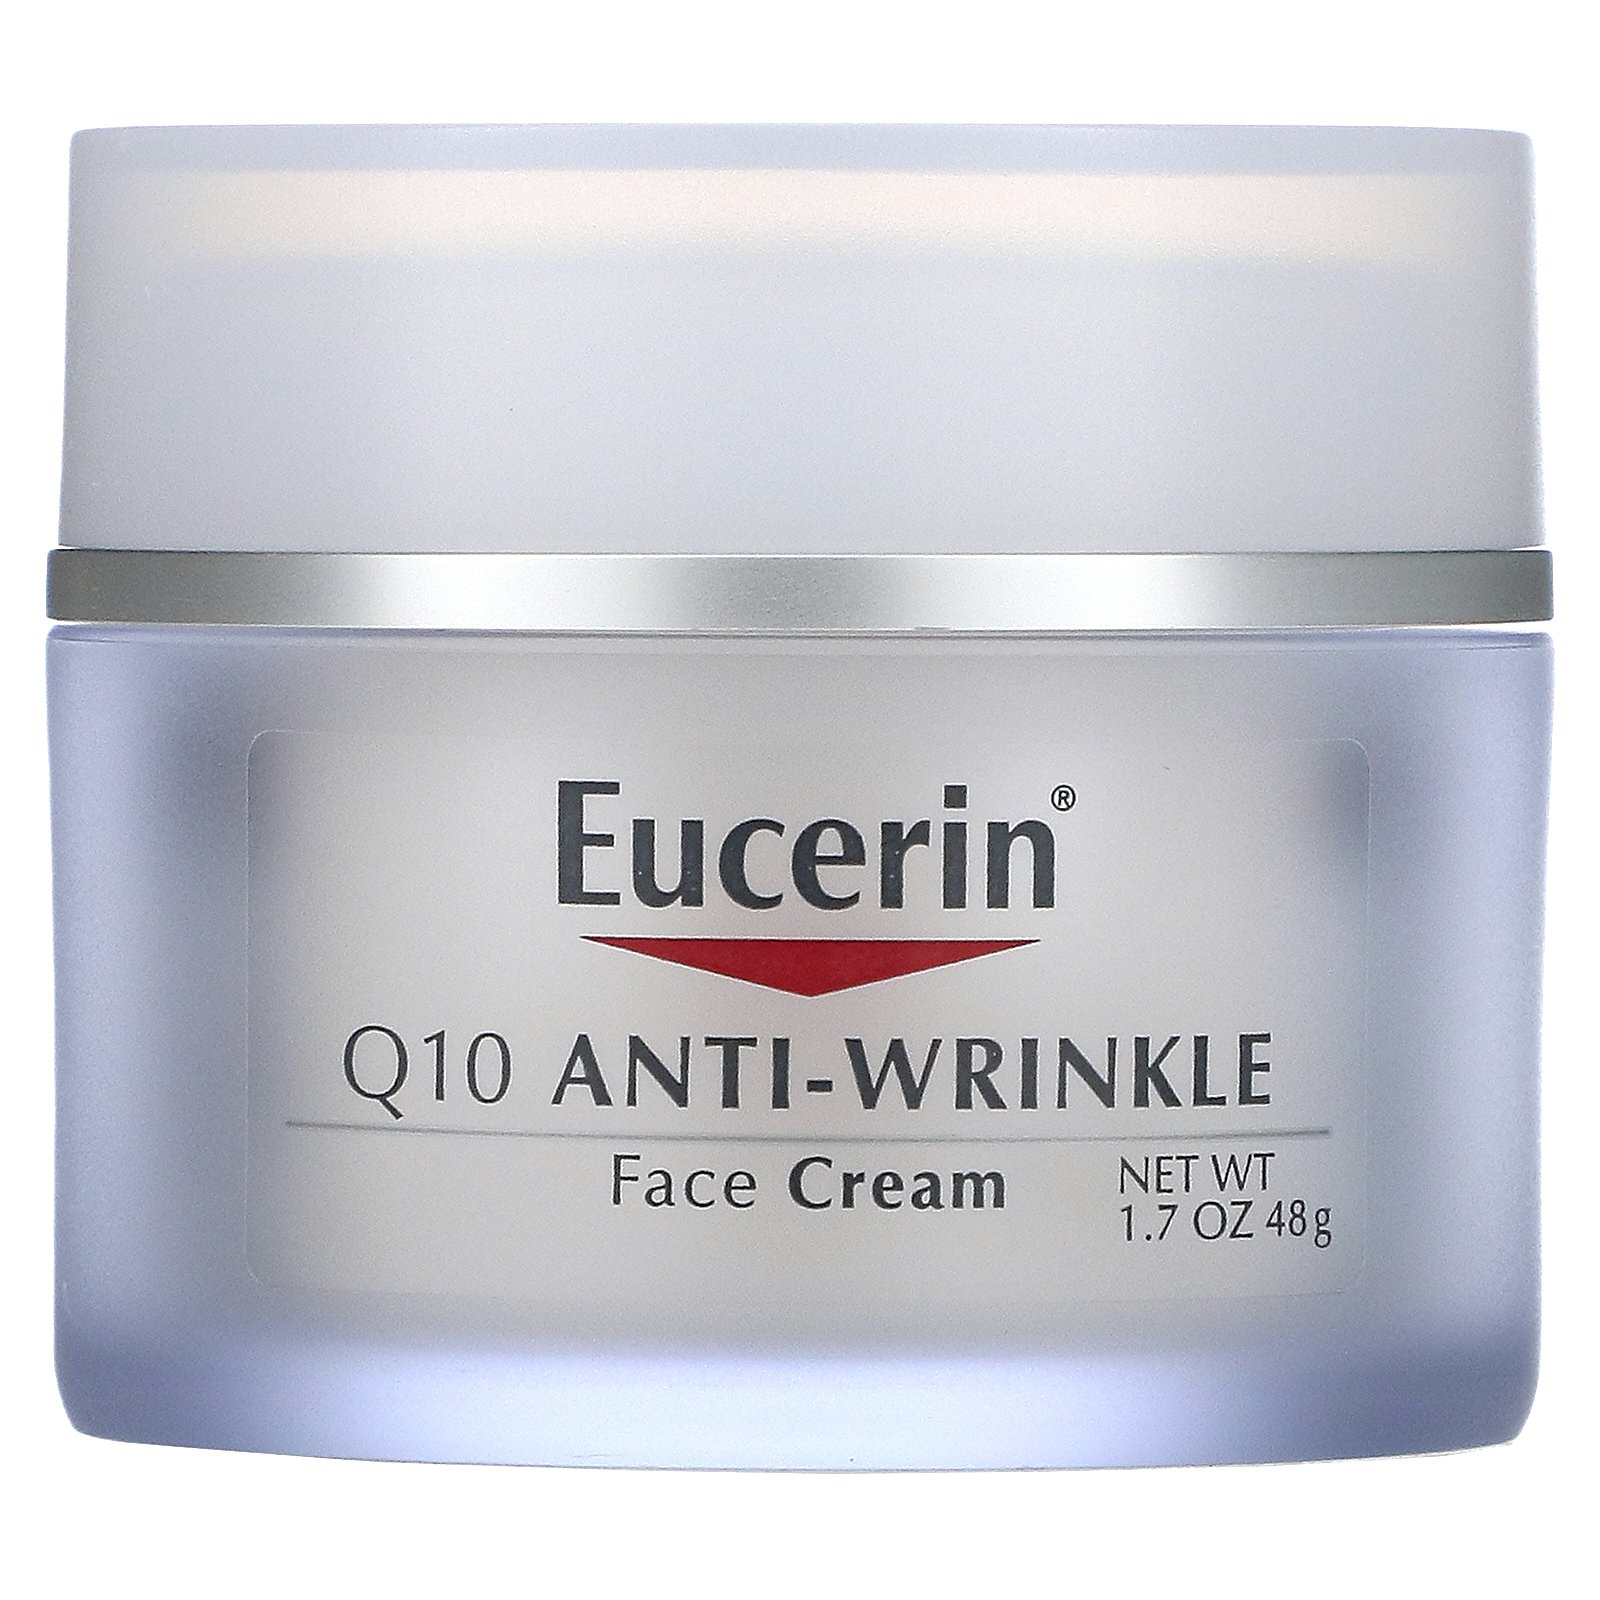 eucerin q10 anti wrinkle face cream review ránctalanító anti aging krém